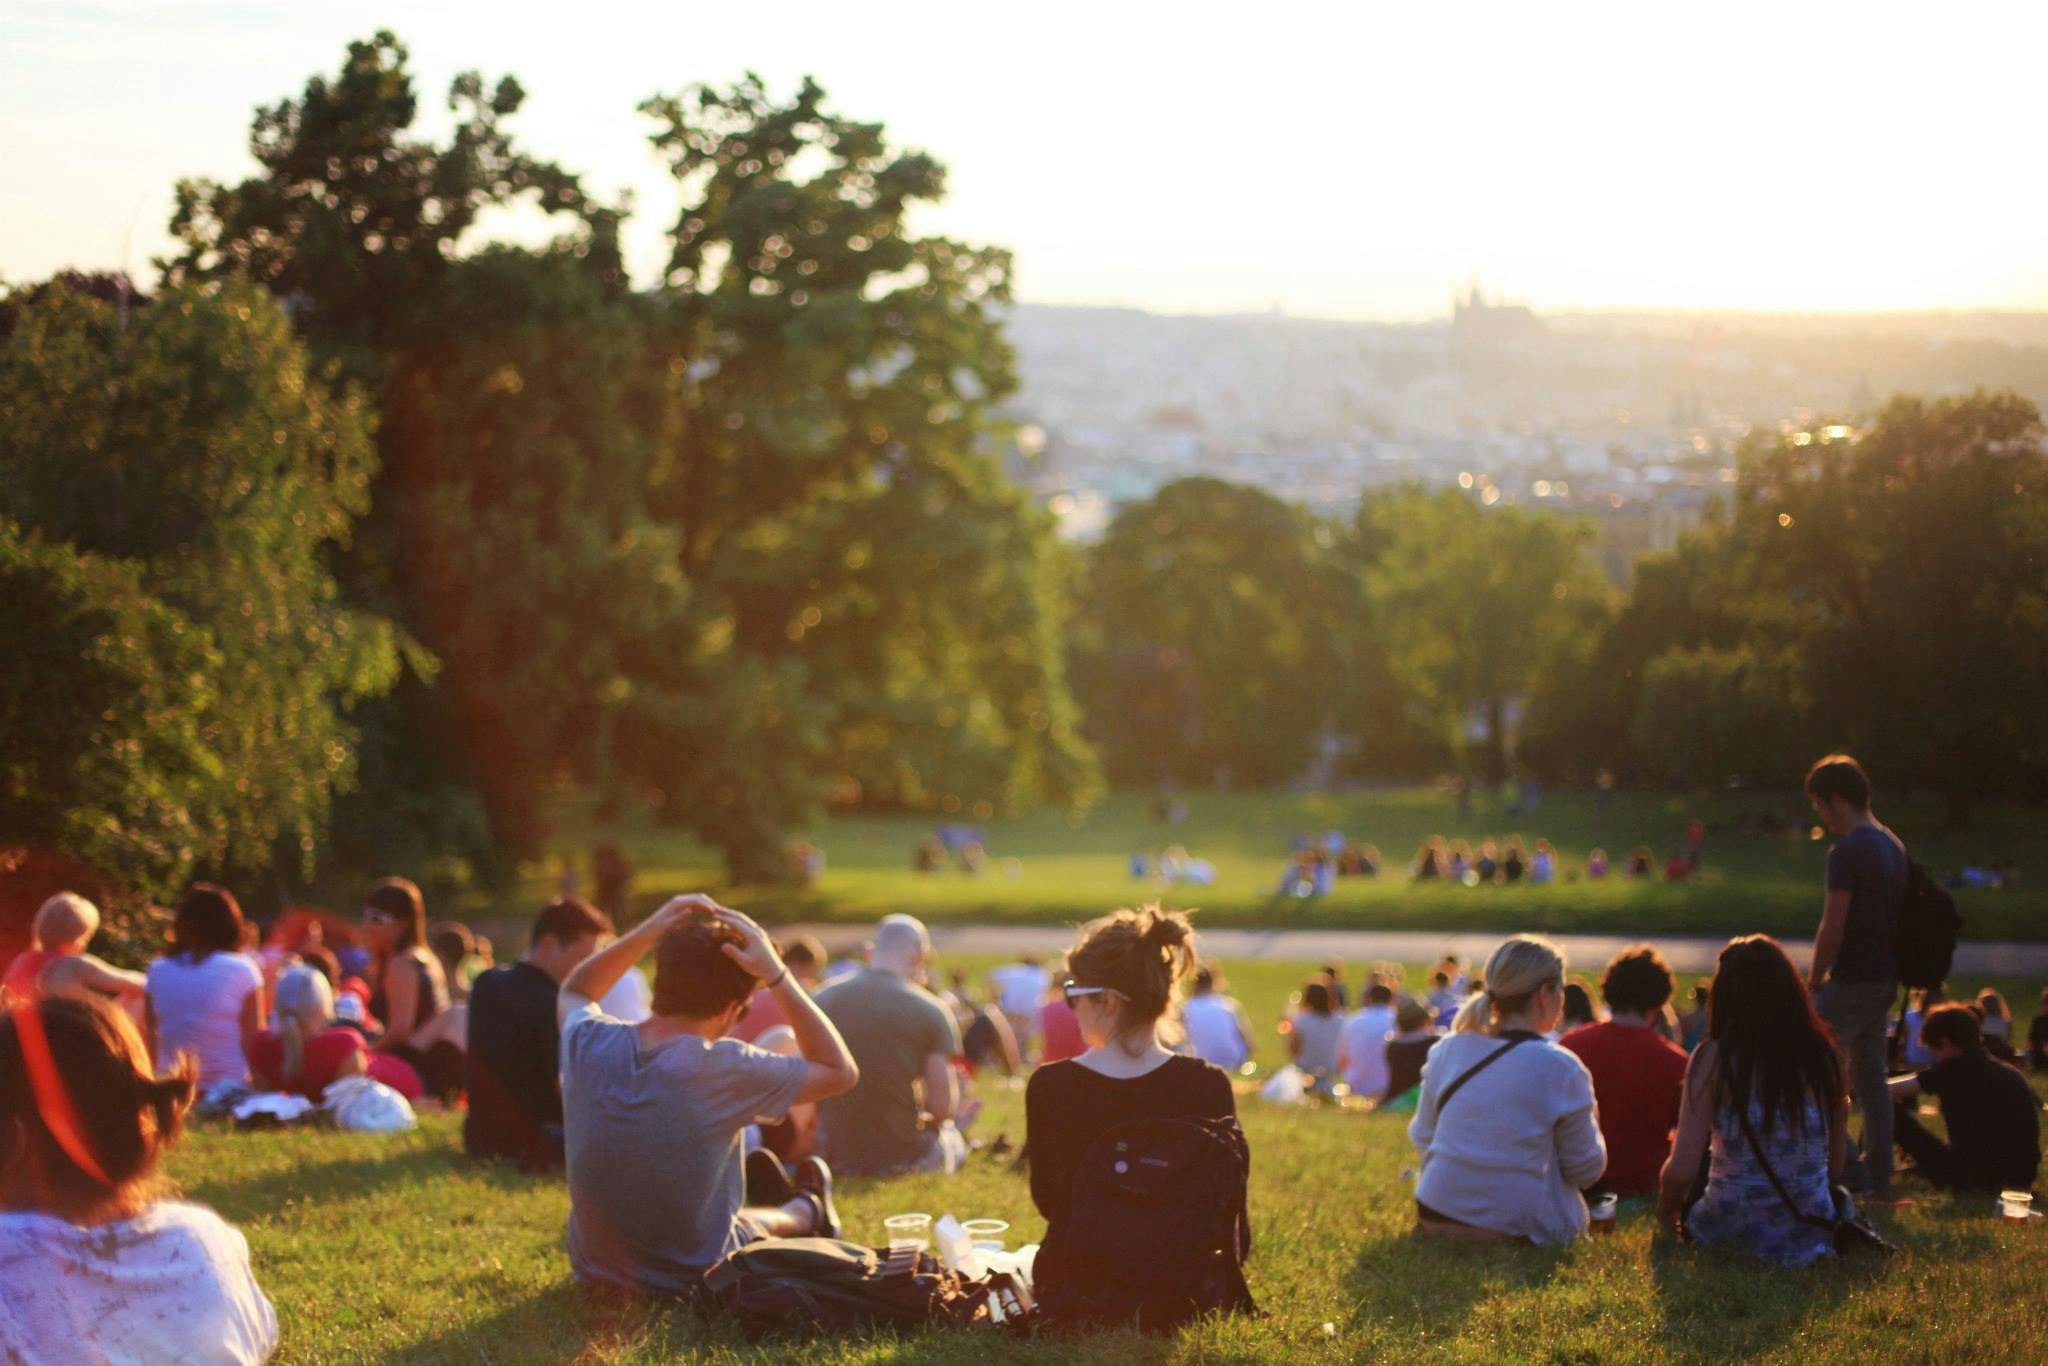 People enjoy sitting in the sun talking in a park.